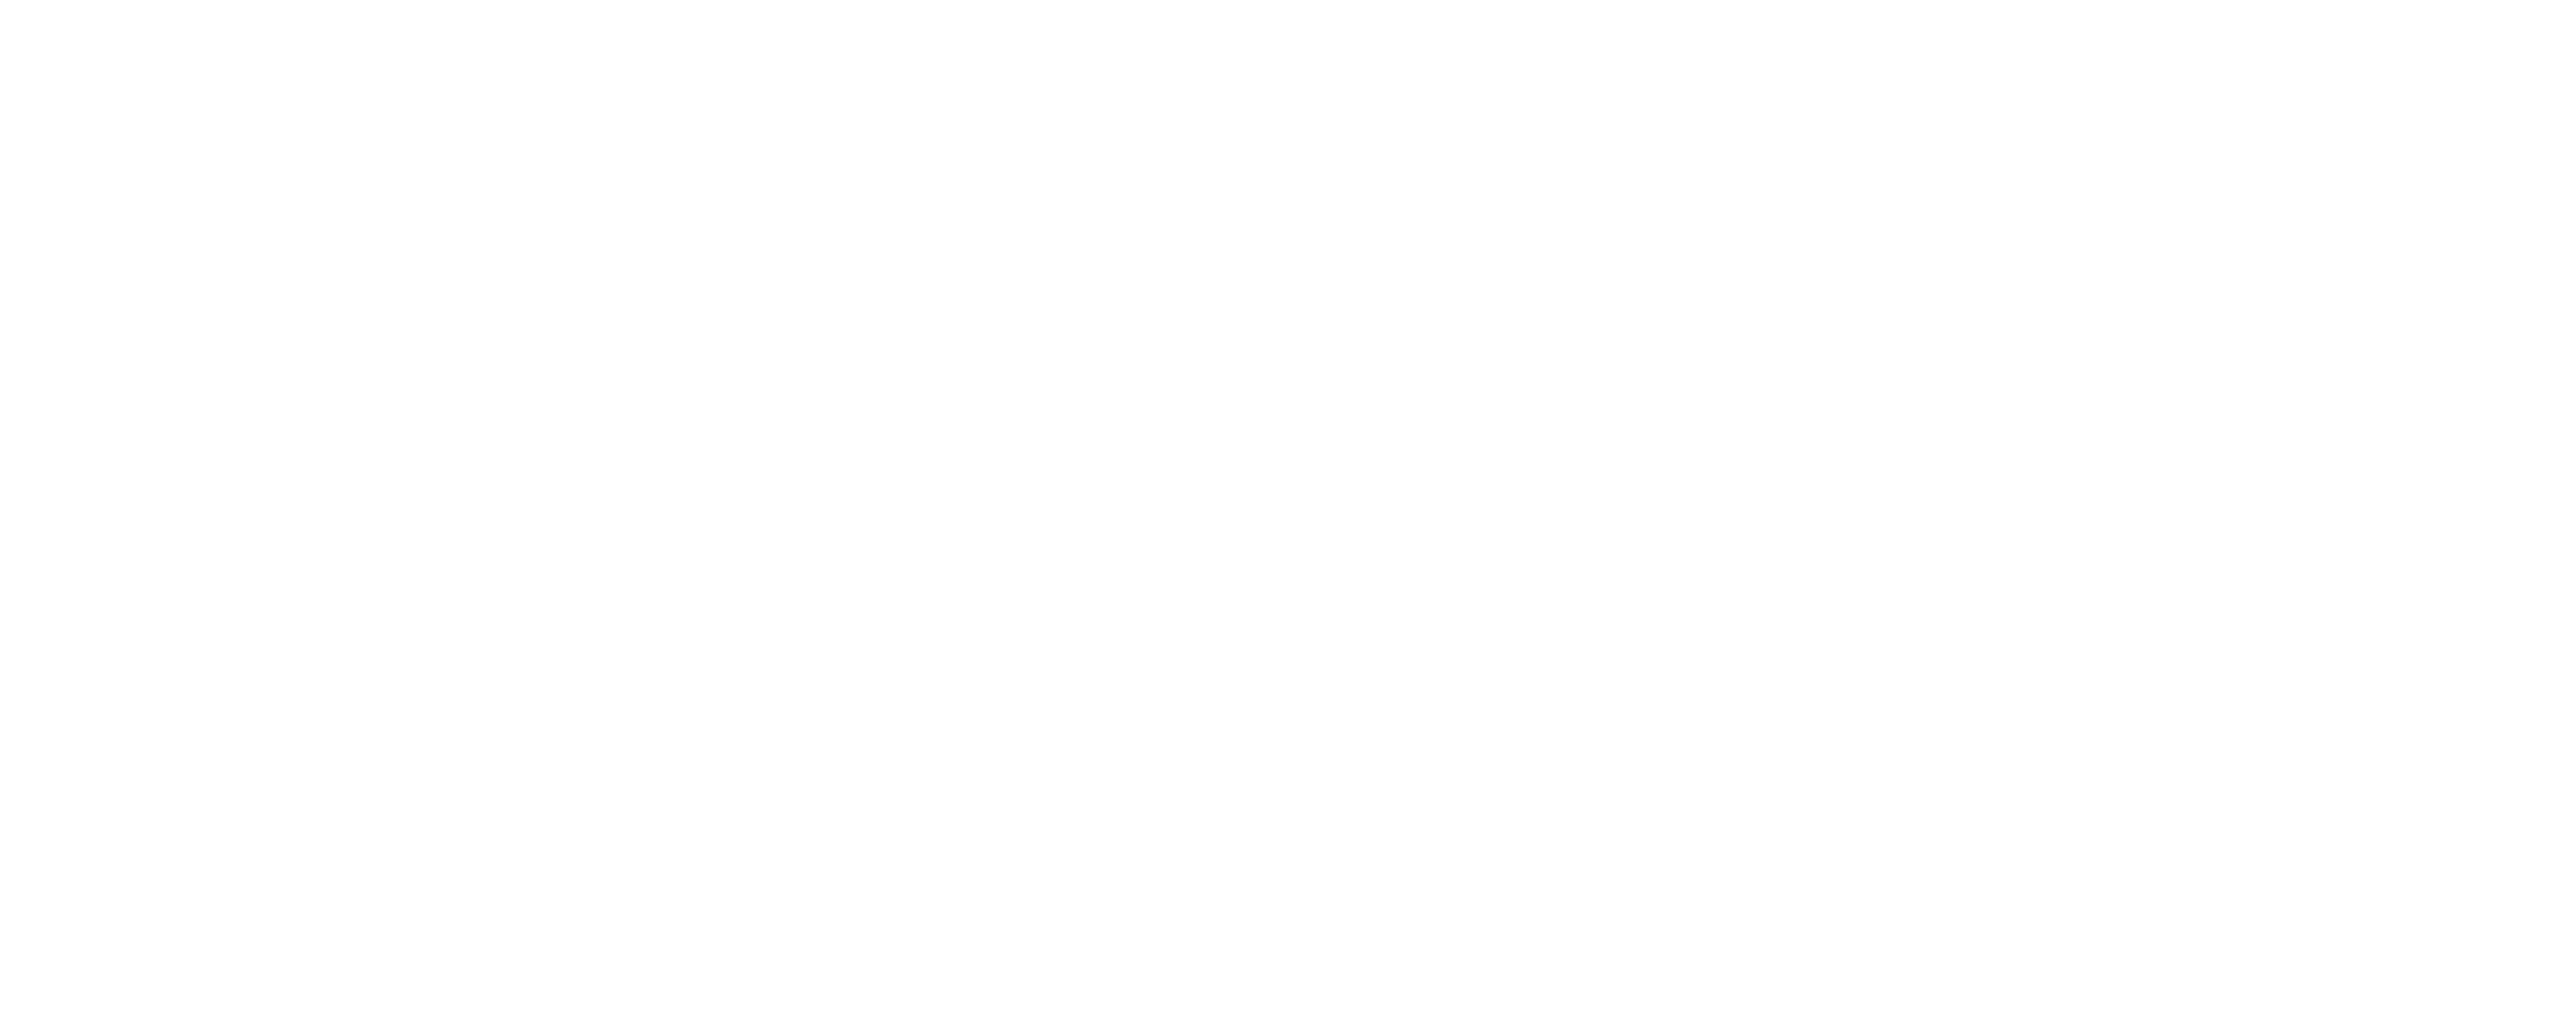 TSS Logo - Overseas Hospitality Recruitment Chefs Recruitment